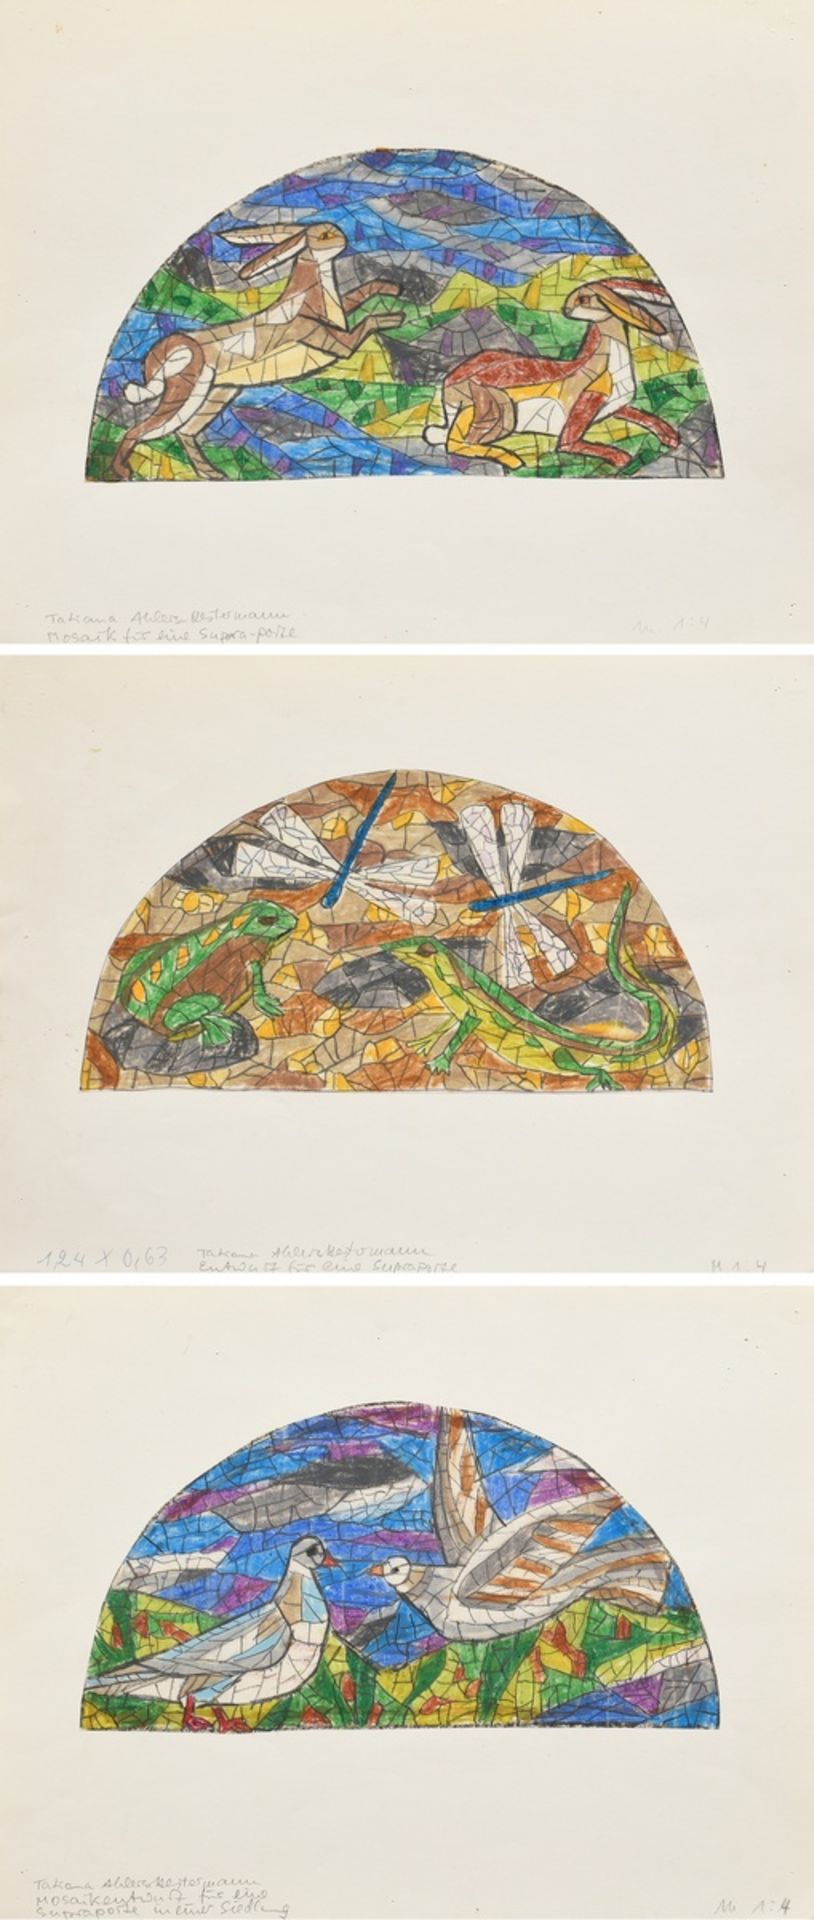 3 Ahlers-Hestermann, Tatiana (1919-2000) "Mosaic designs for a supraporte in a housing estate" (sca